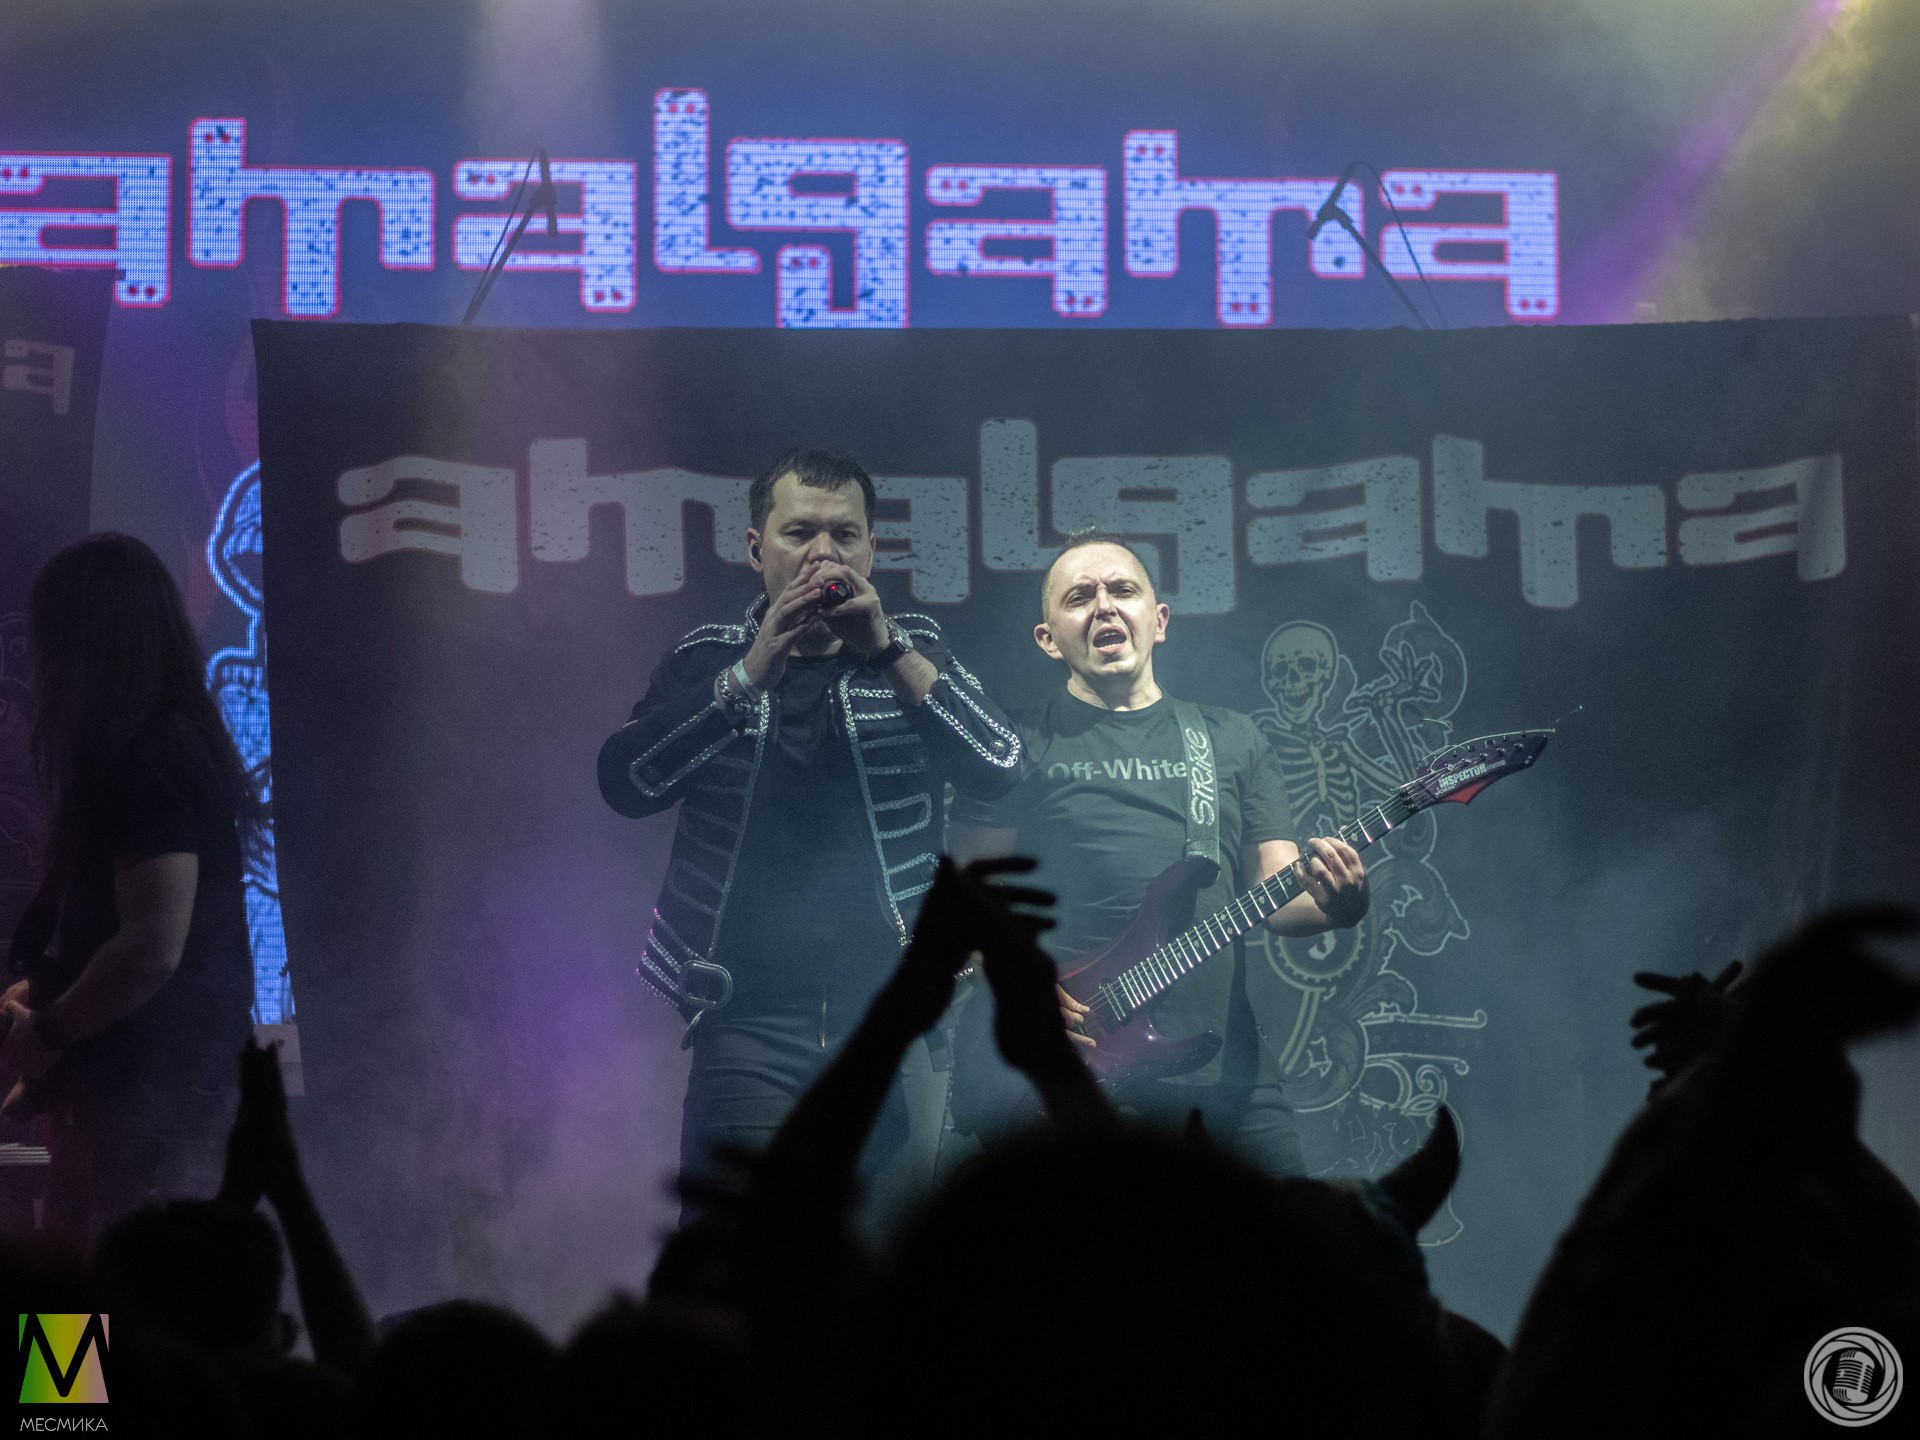 Рок группа Amalgama 25.02 выступила на разогреве у Hammerfall в Петербурге